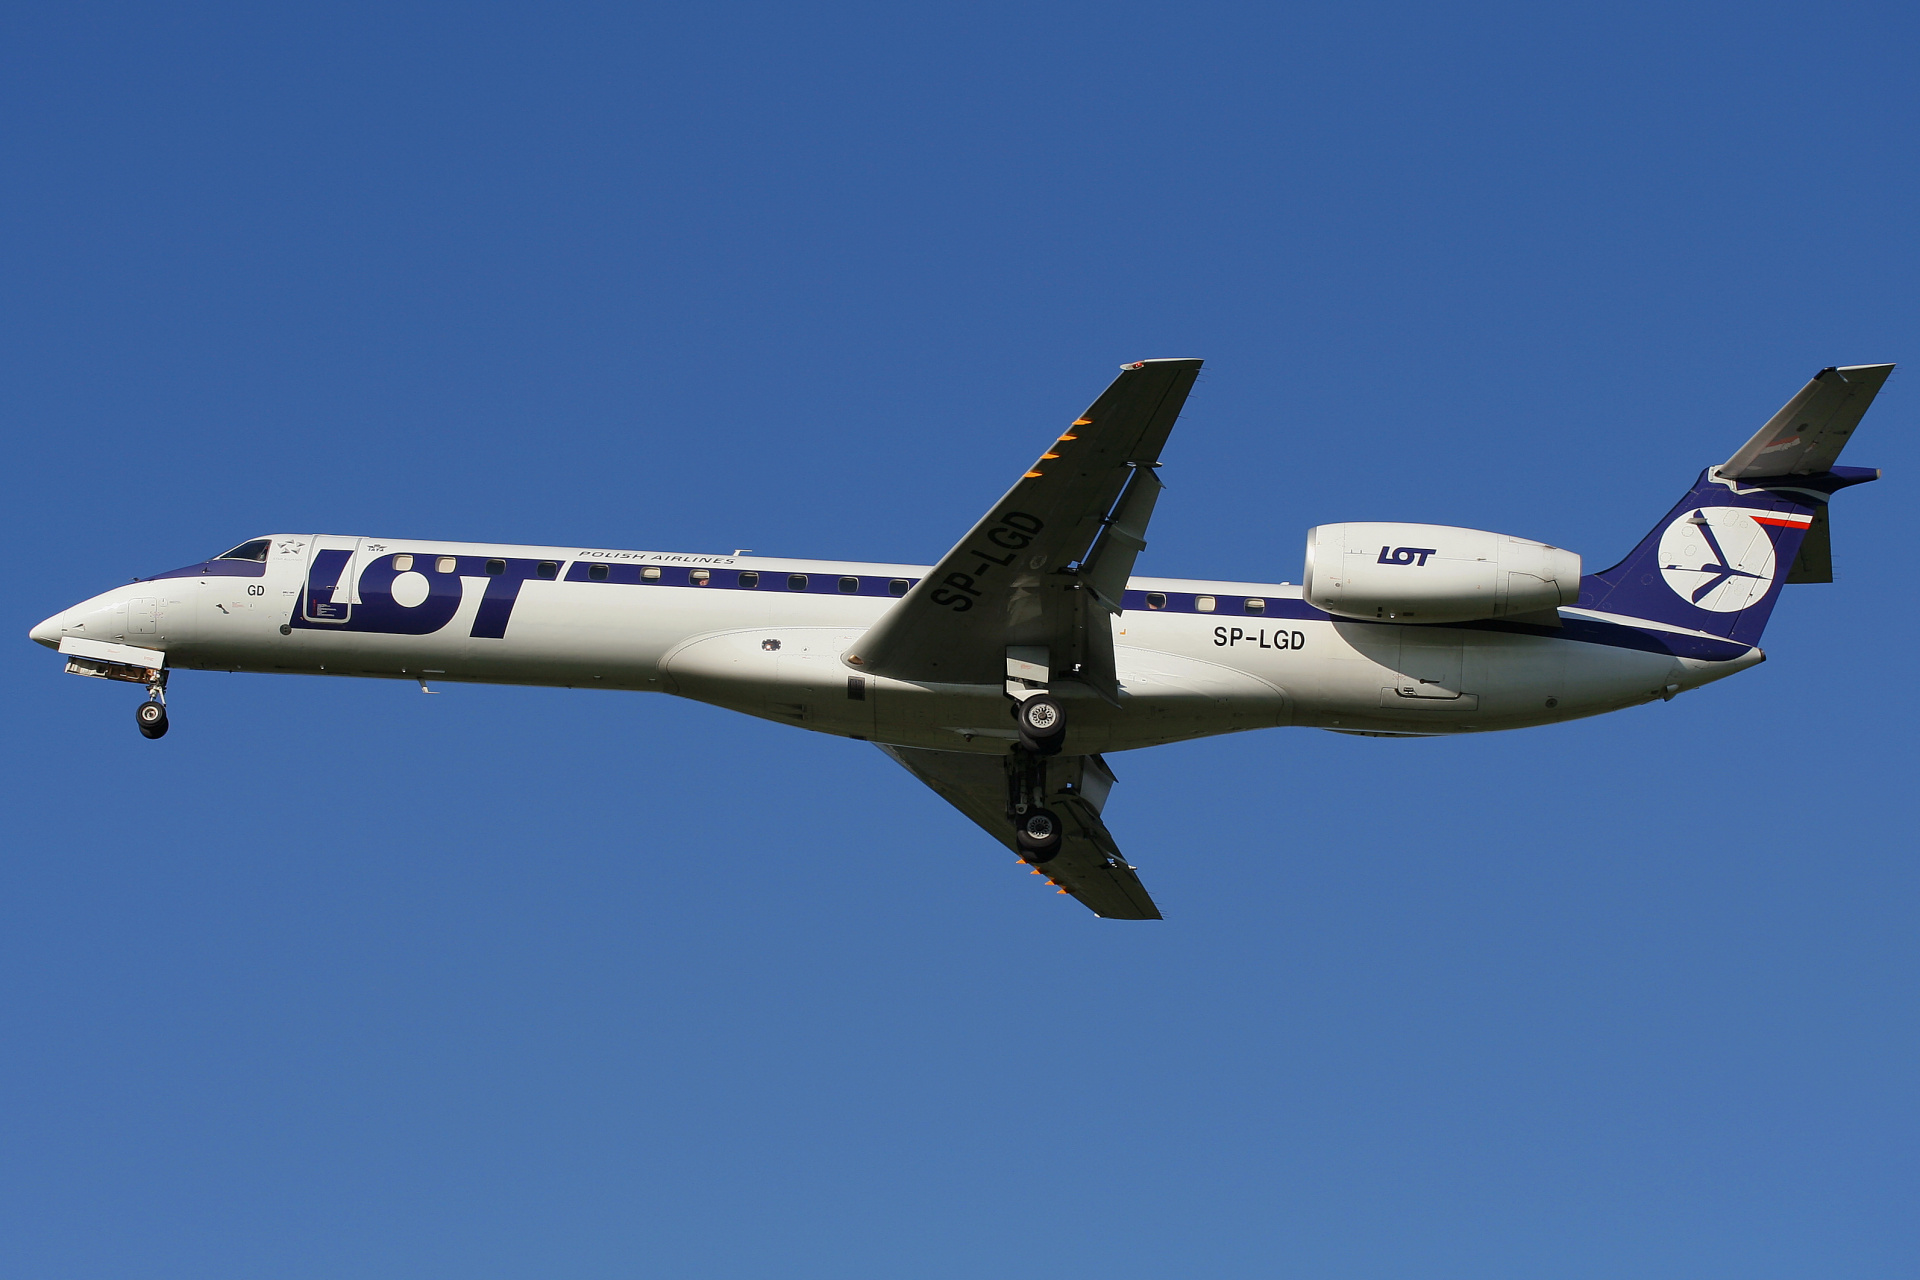 SP-LGD (Aircraft » EPWA Spotting » Embraer ERJ-145 » LOT Polish Airlines)